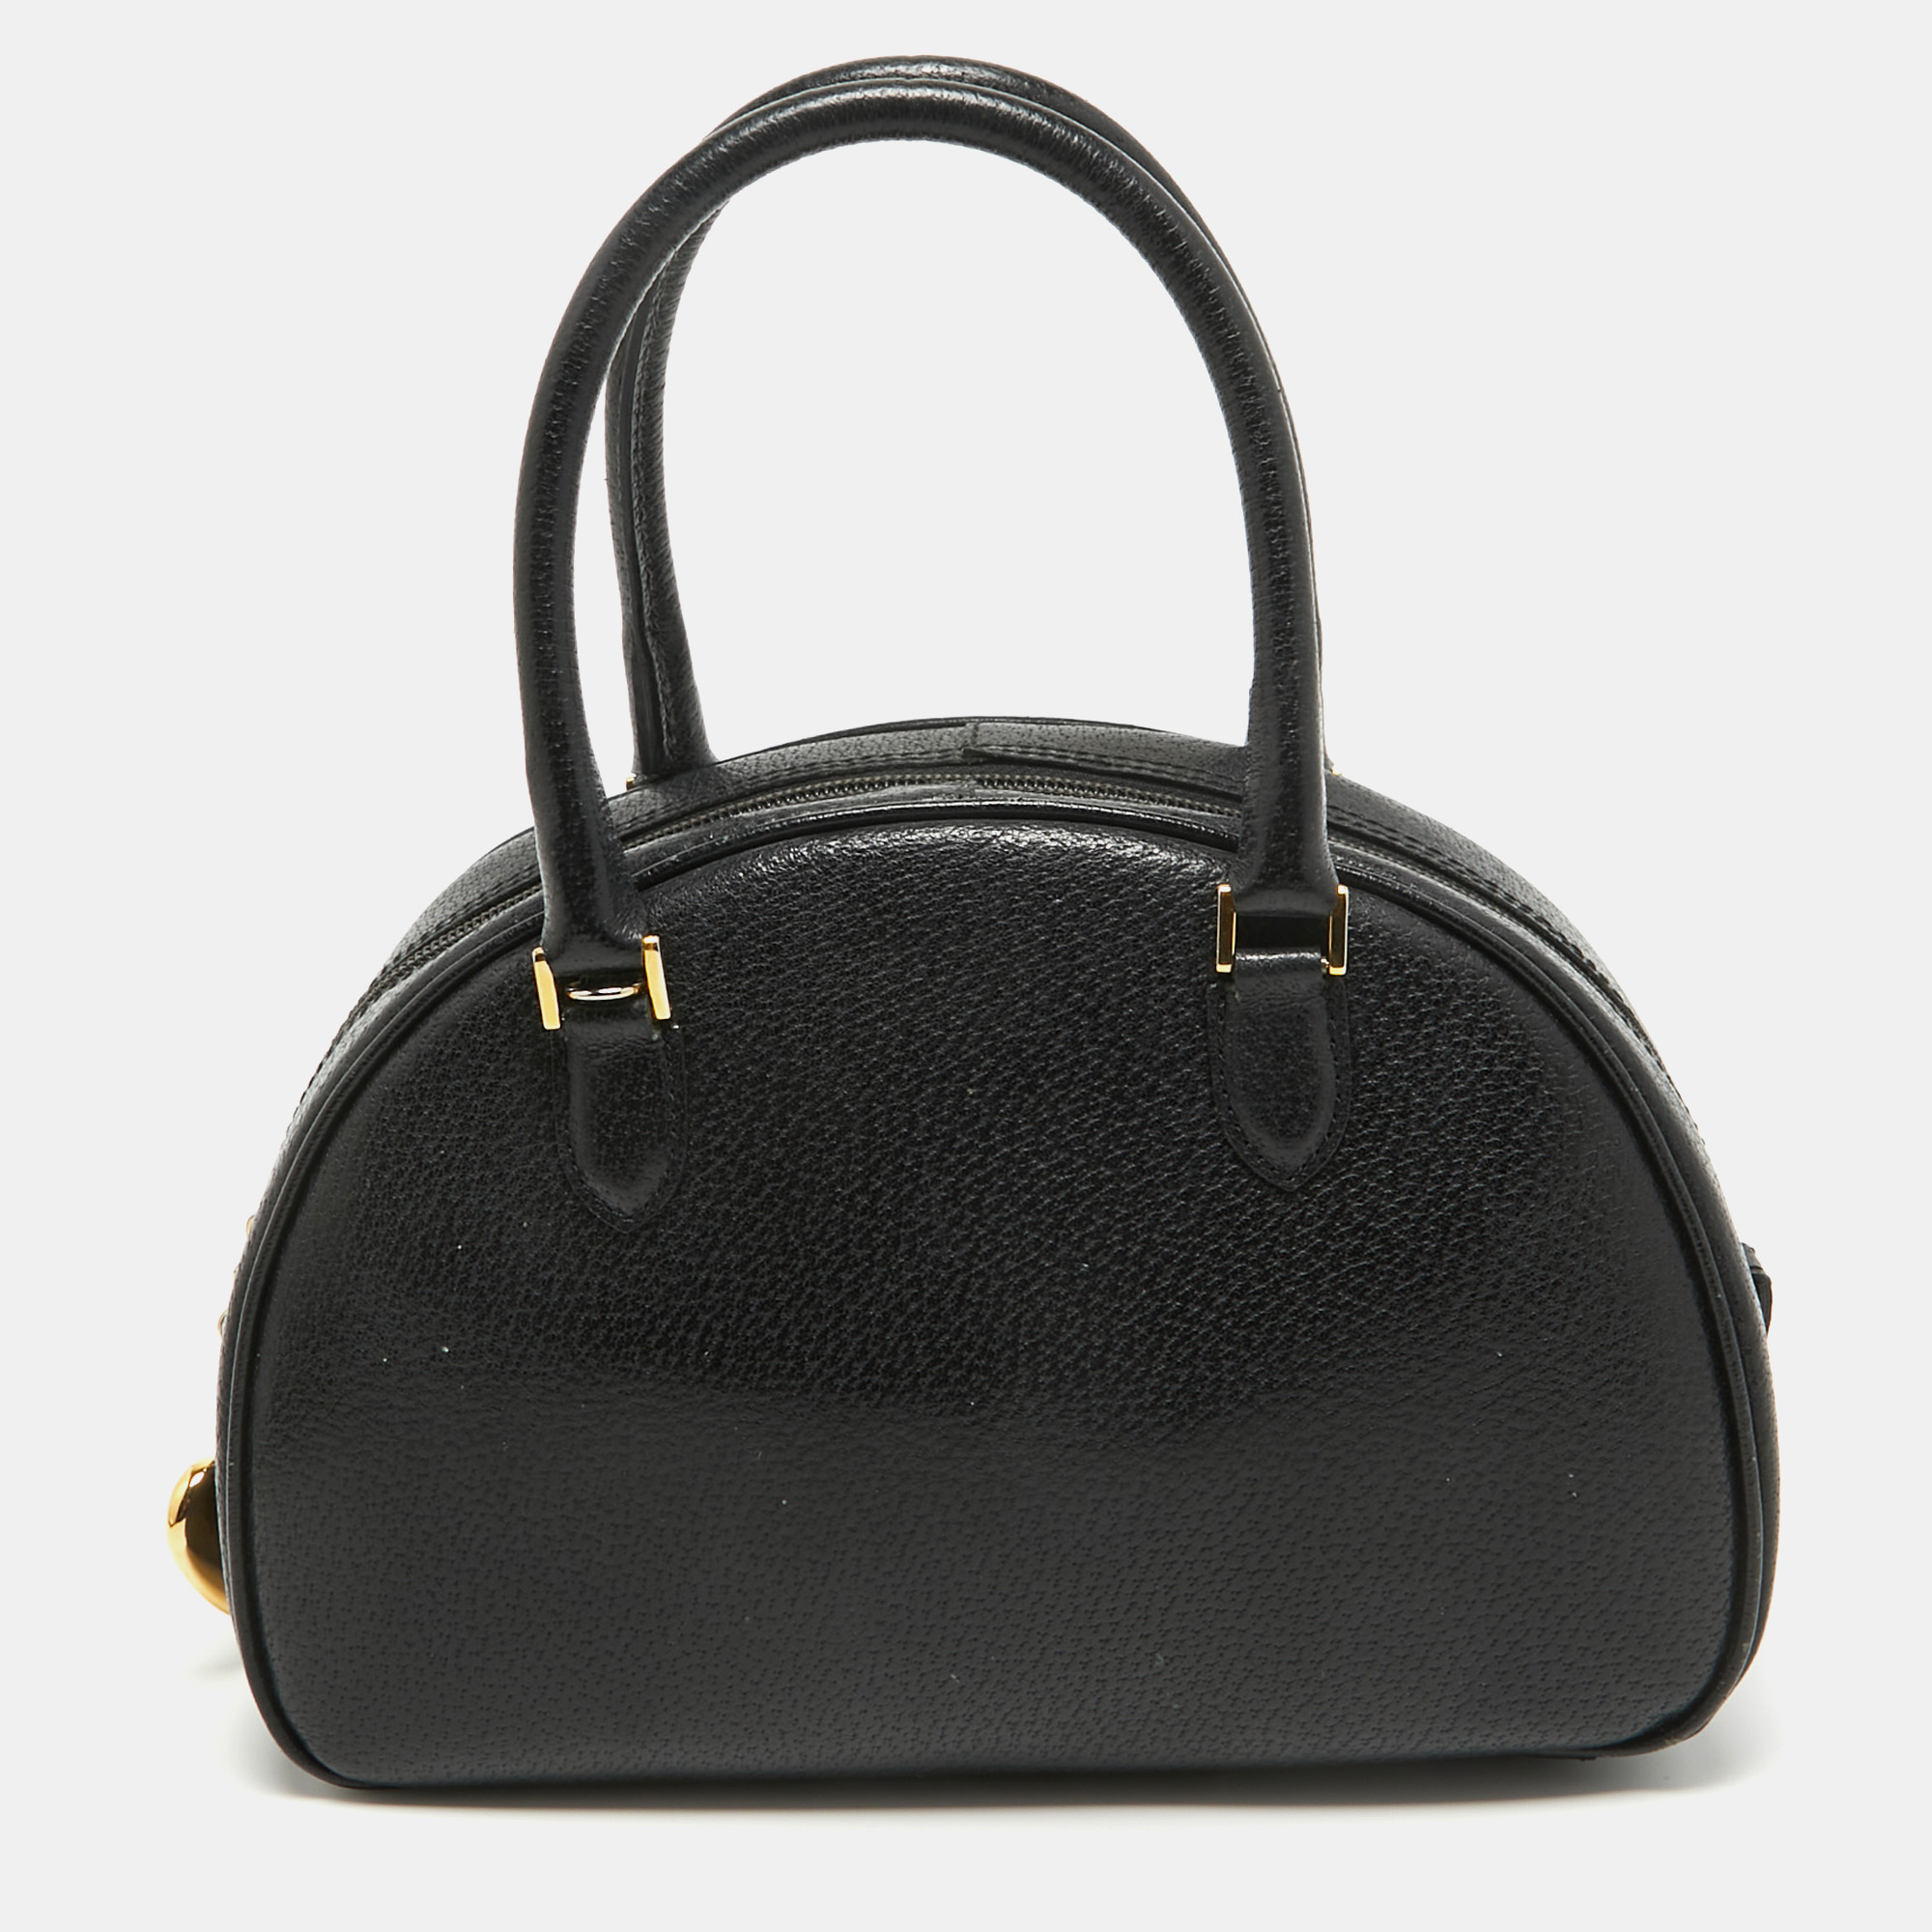 Moschino black leather heart charm satchel